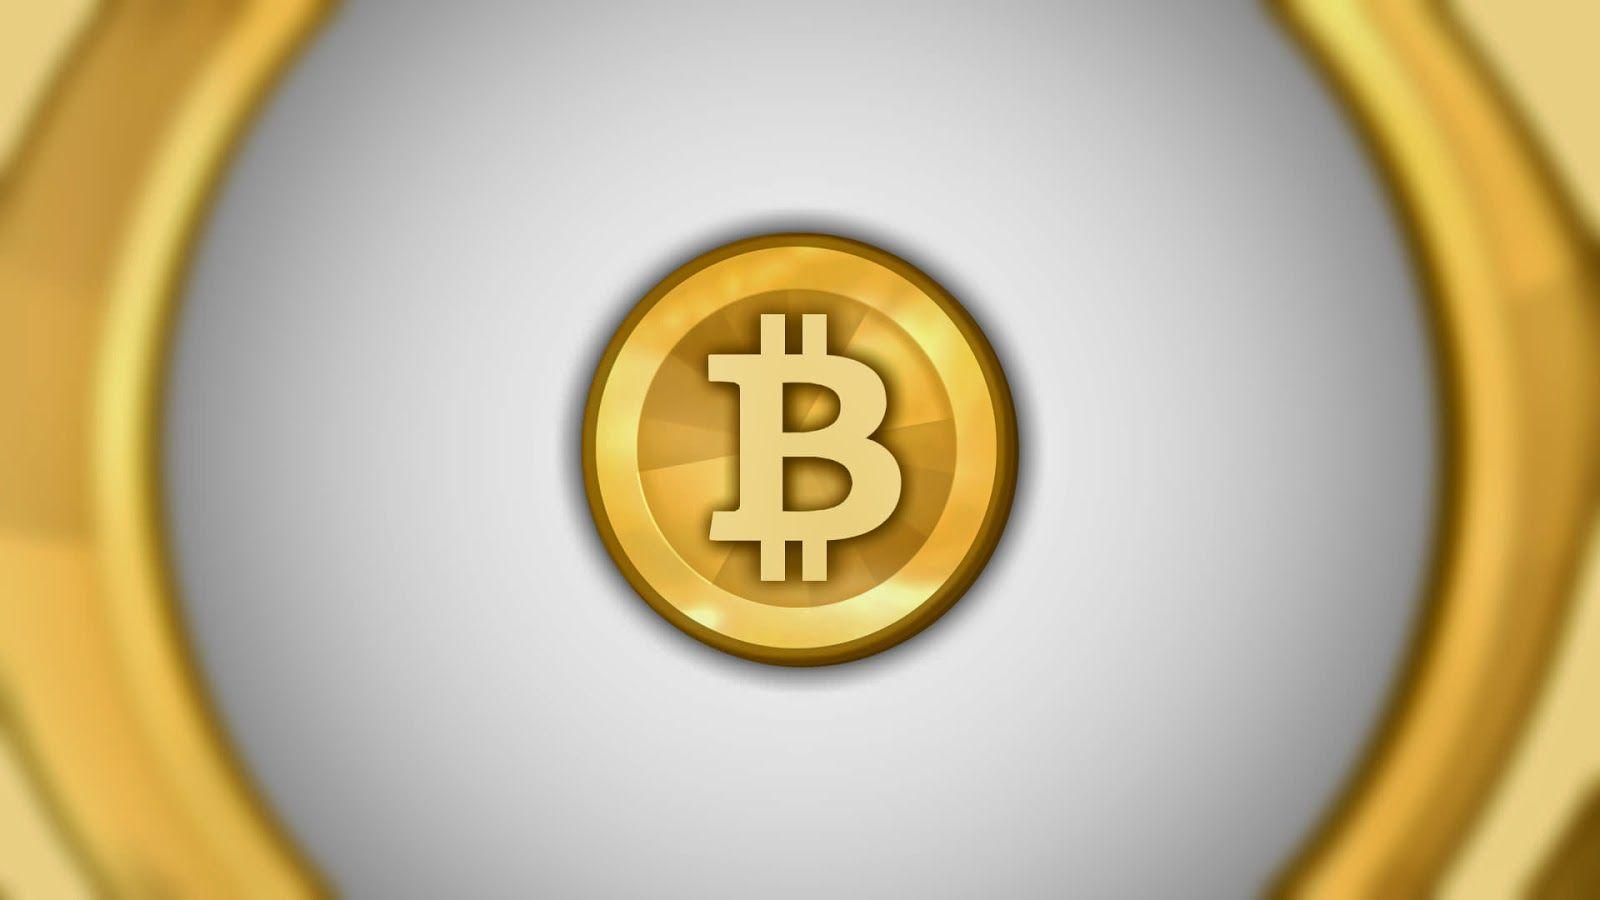 Gold Bitcoin Logo - White And Gold Bitcoin Logo 2014